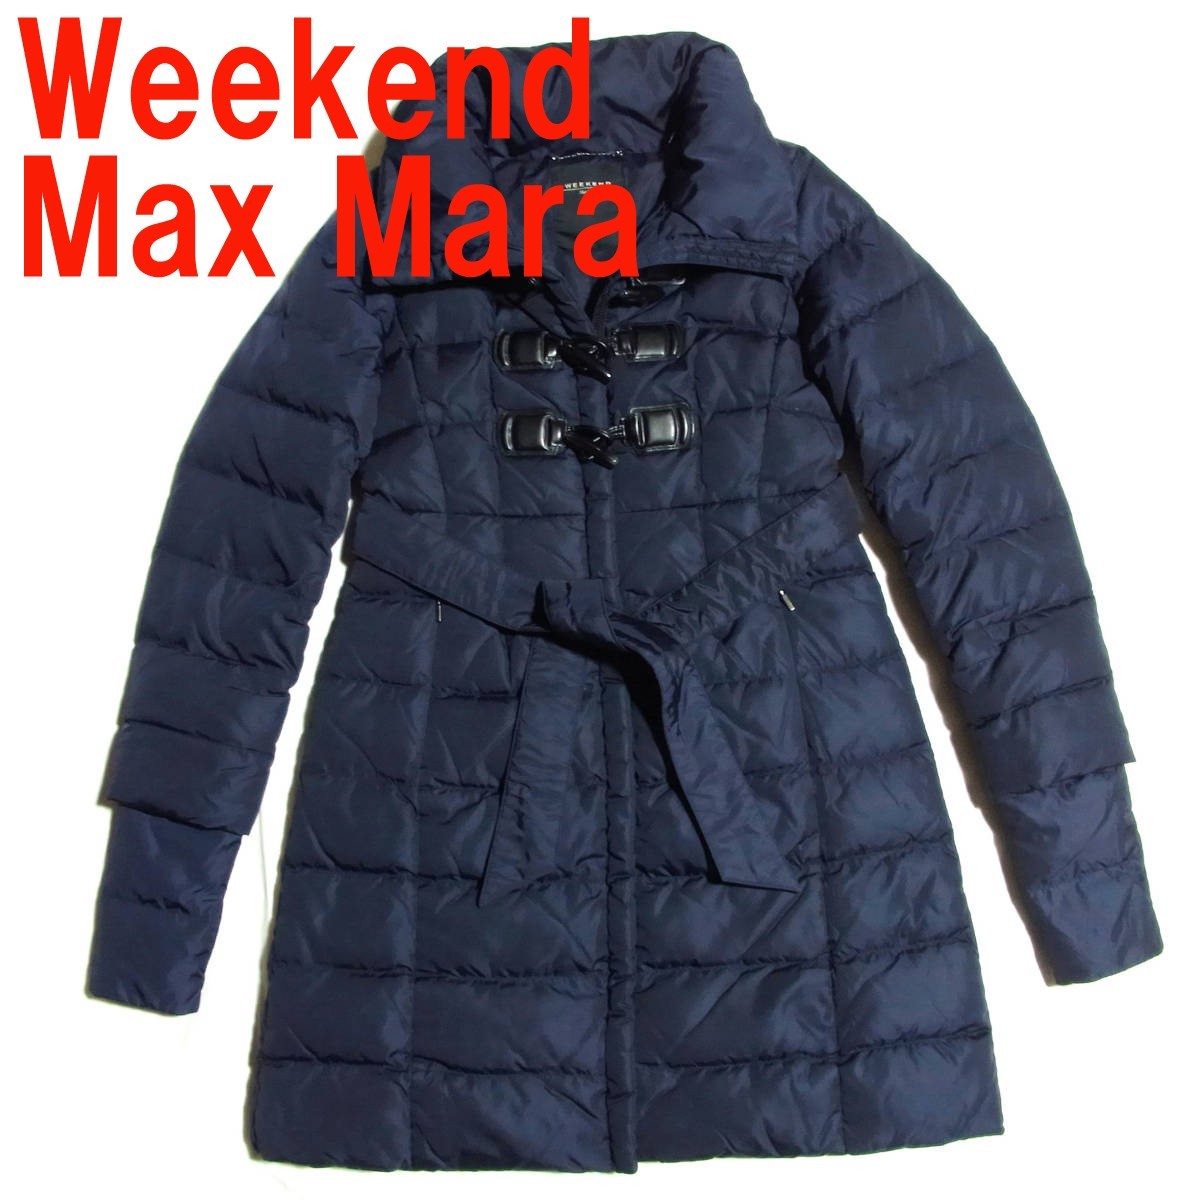 Weekend Max Mara ウィークエンド マックスマーラ ダッフル ダウン コート 38 ネイビー